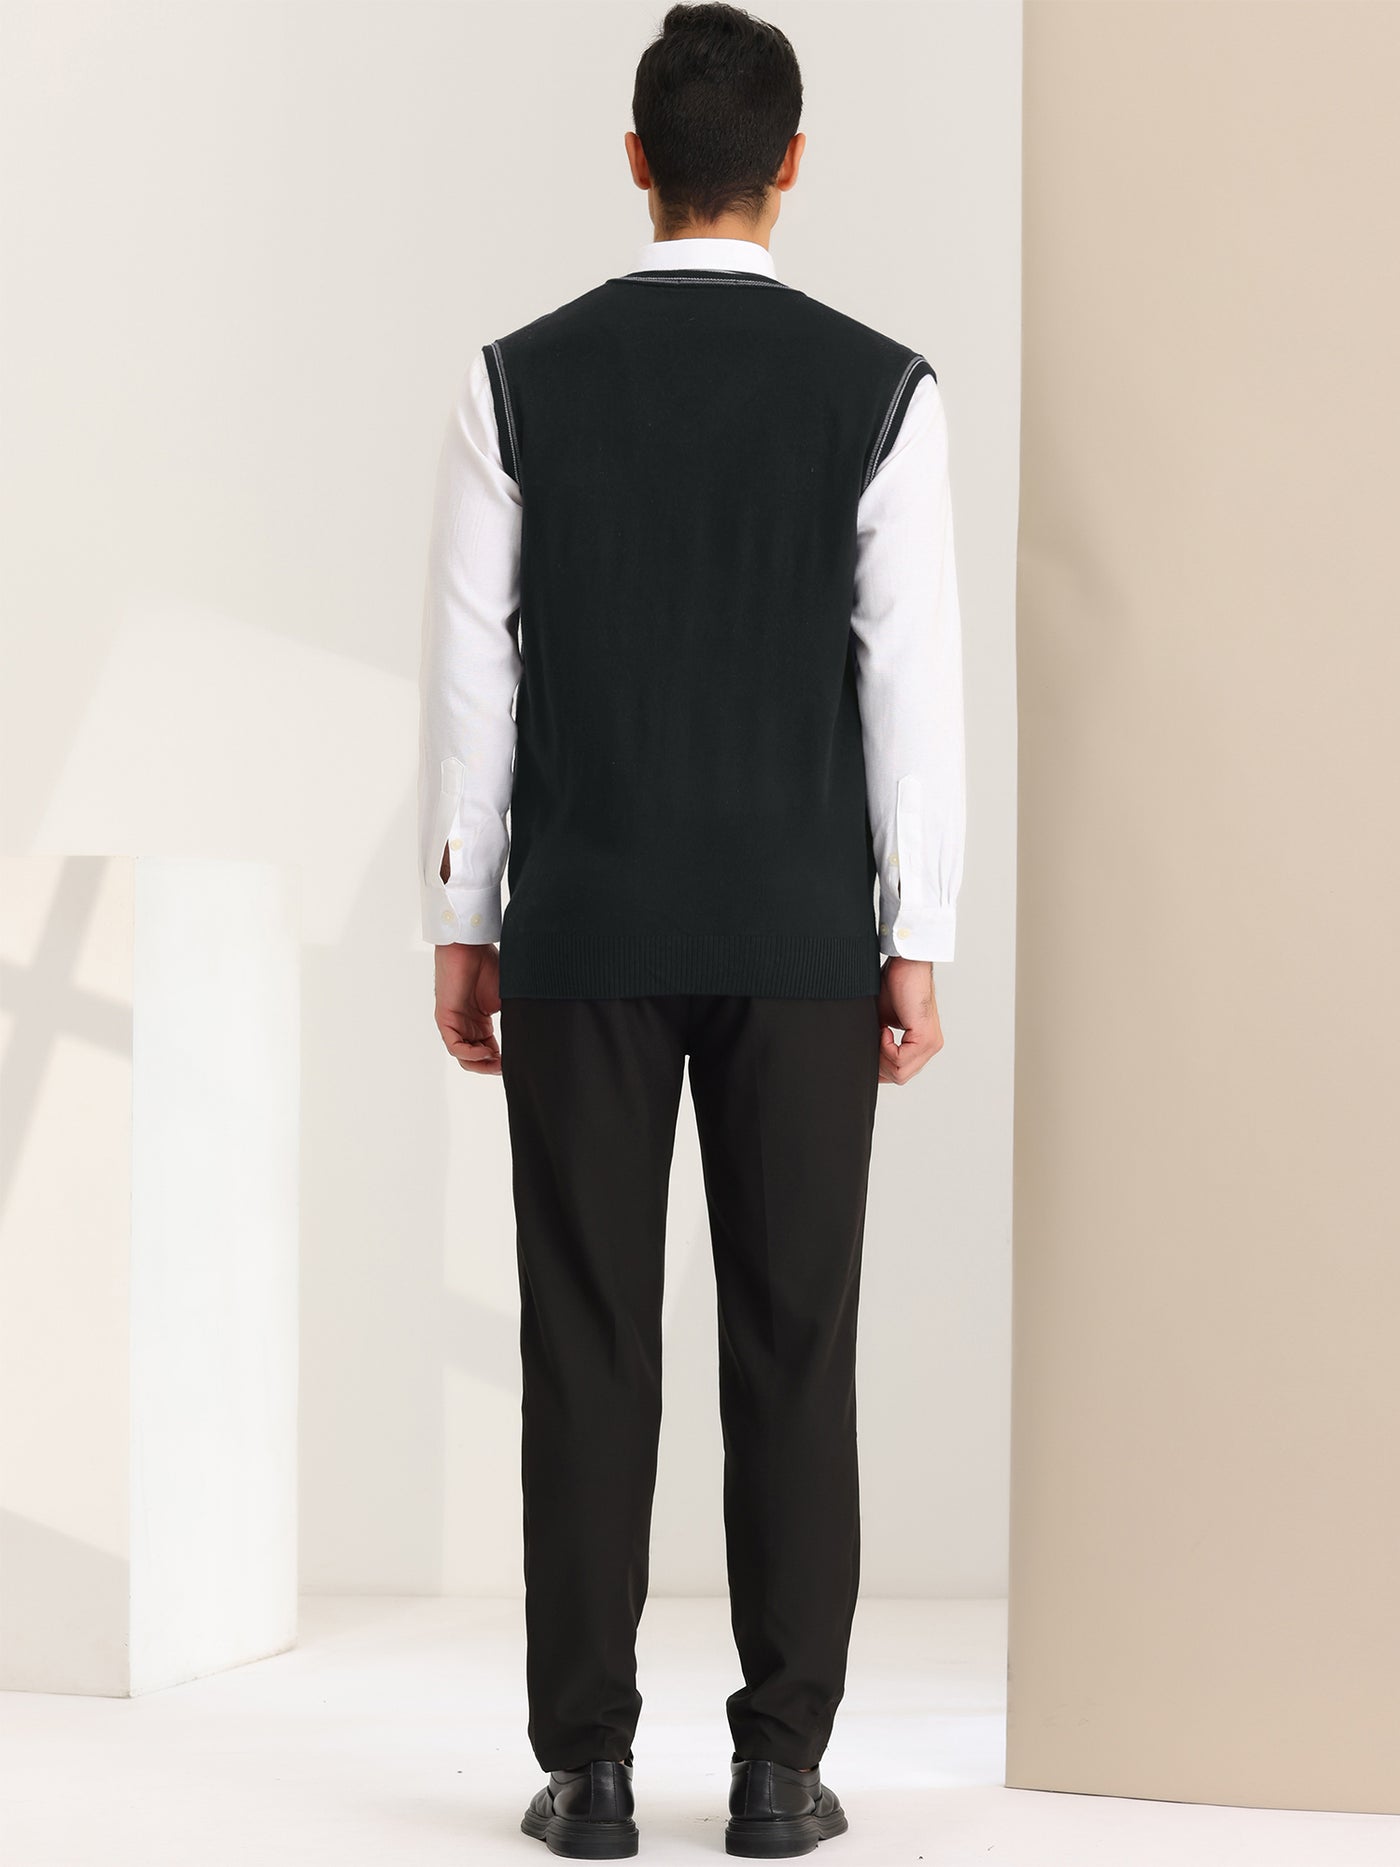 Bublédon Men's Business Slim Fit V Neck Sleeveless Knitted Pullover Sweater Vest